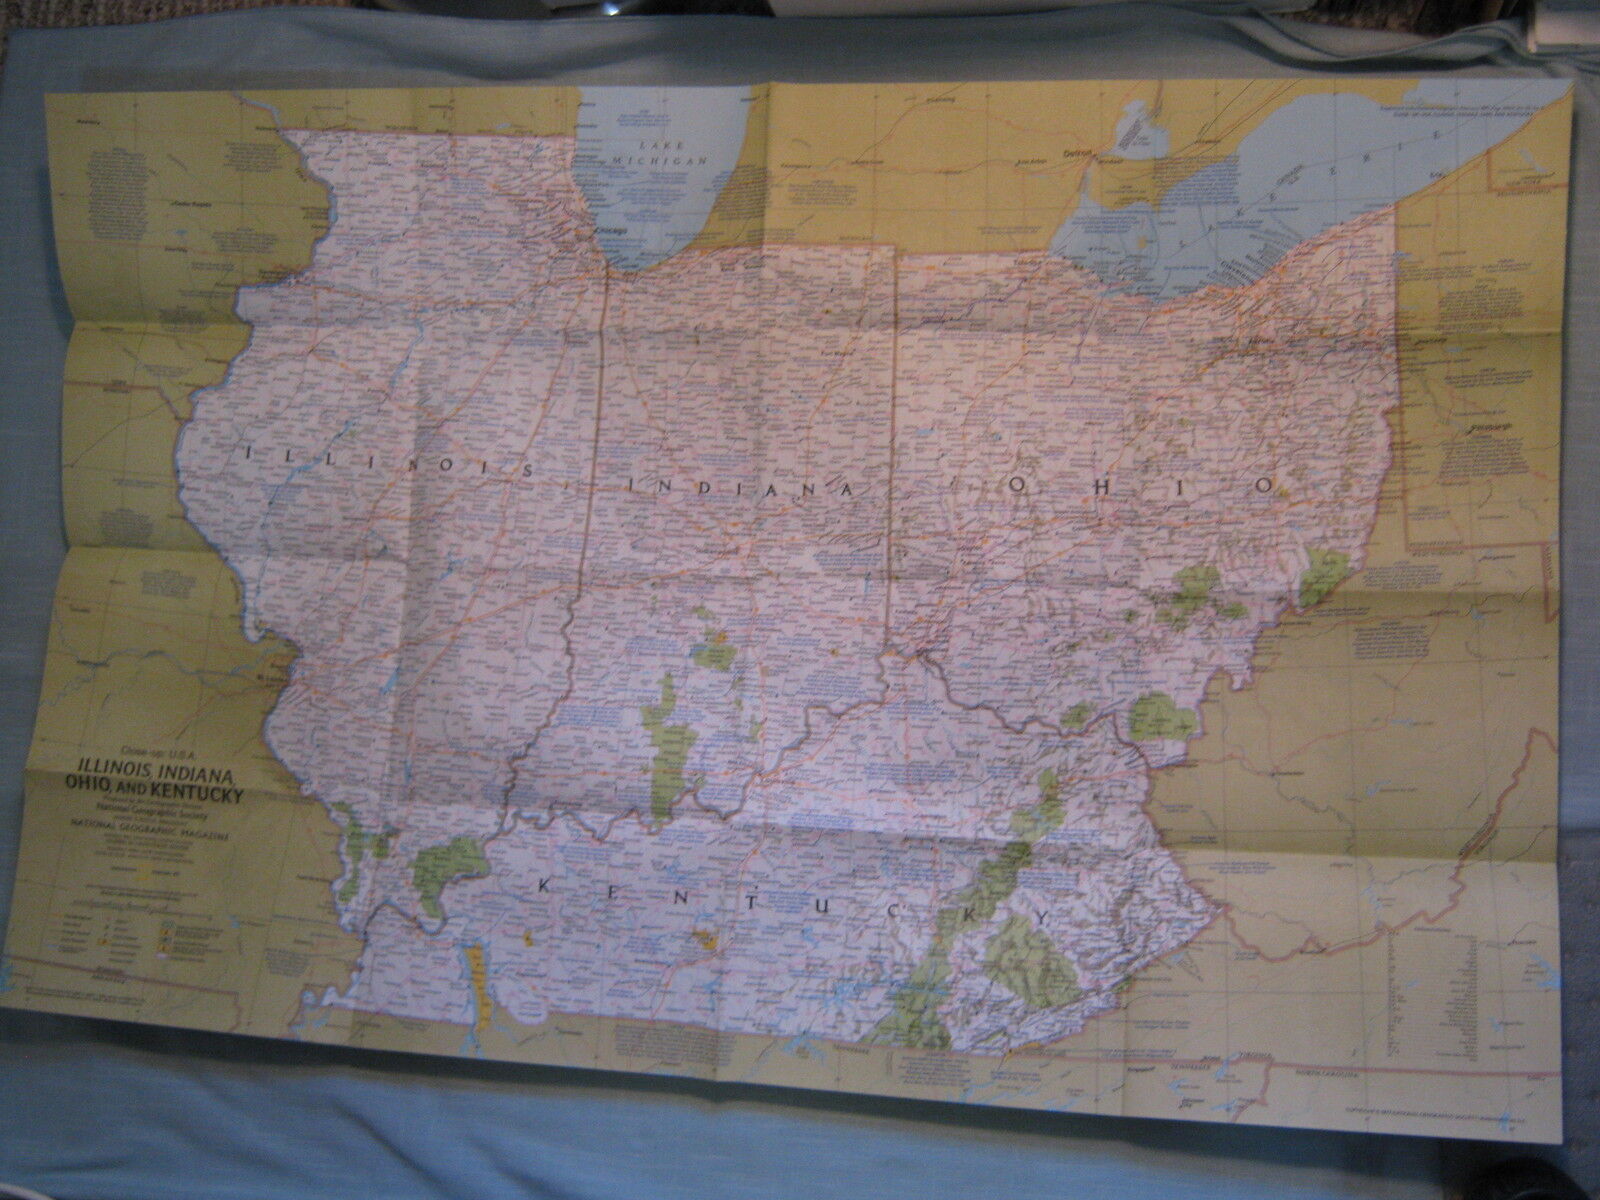 ILLINOIS INDIANA OHIO KENTUCKY MAP HEARTLAND USA National Geographic Feb. 1977